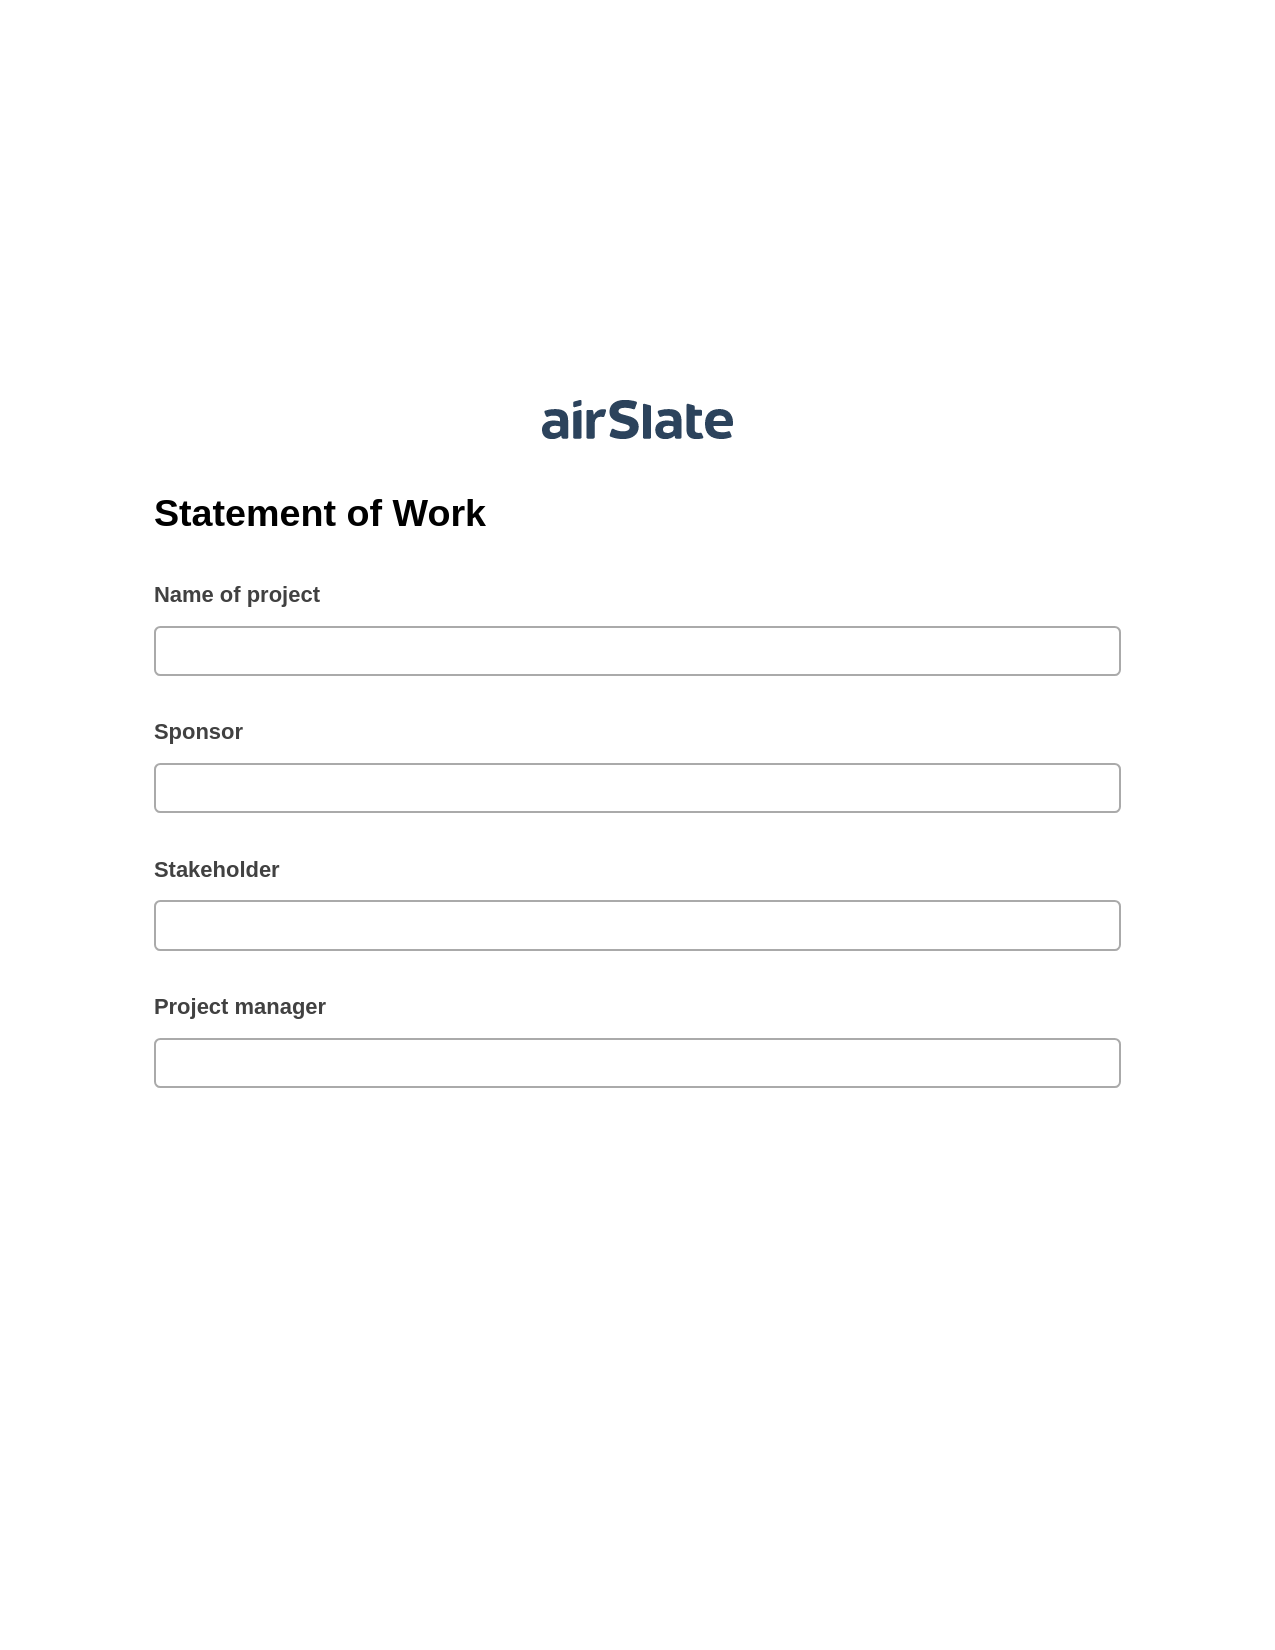 Statement of Work Pre-fill Document Bot, SendGrid send Campaign bot, Slack Notification Postfinish Bot